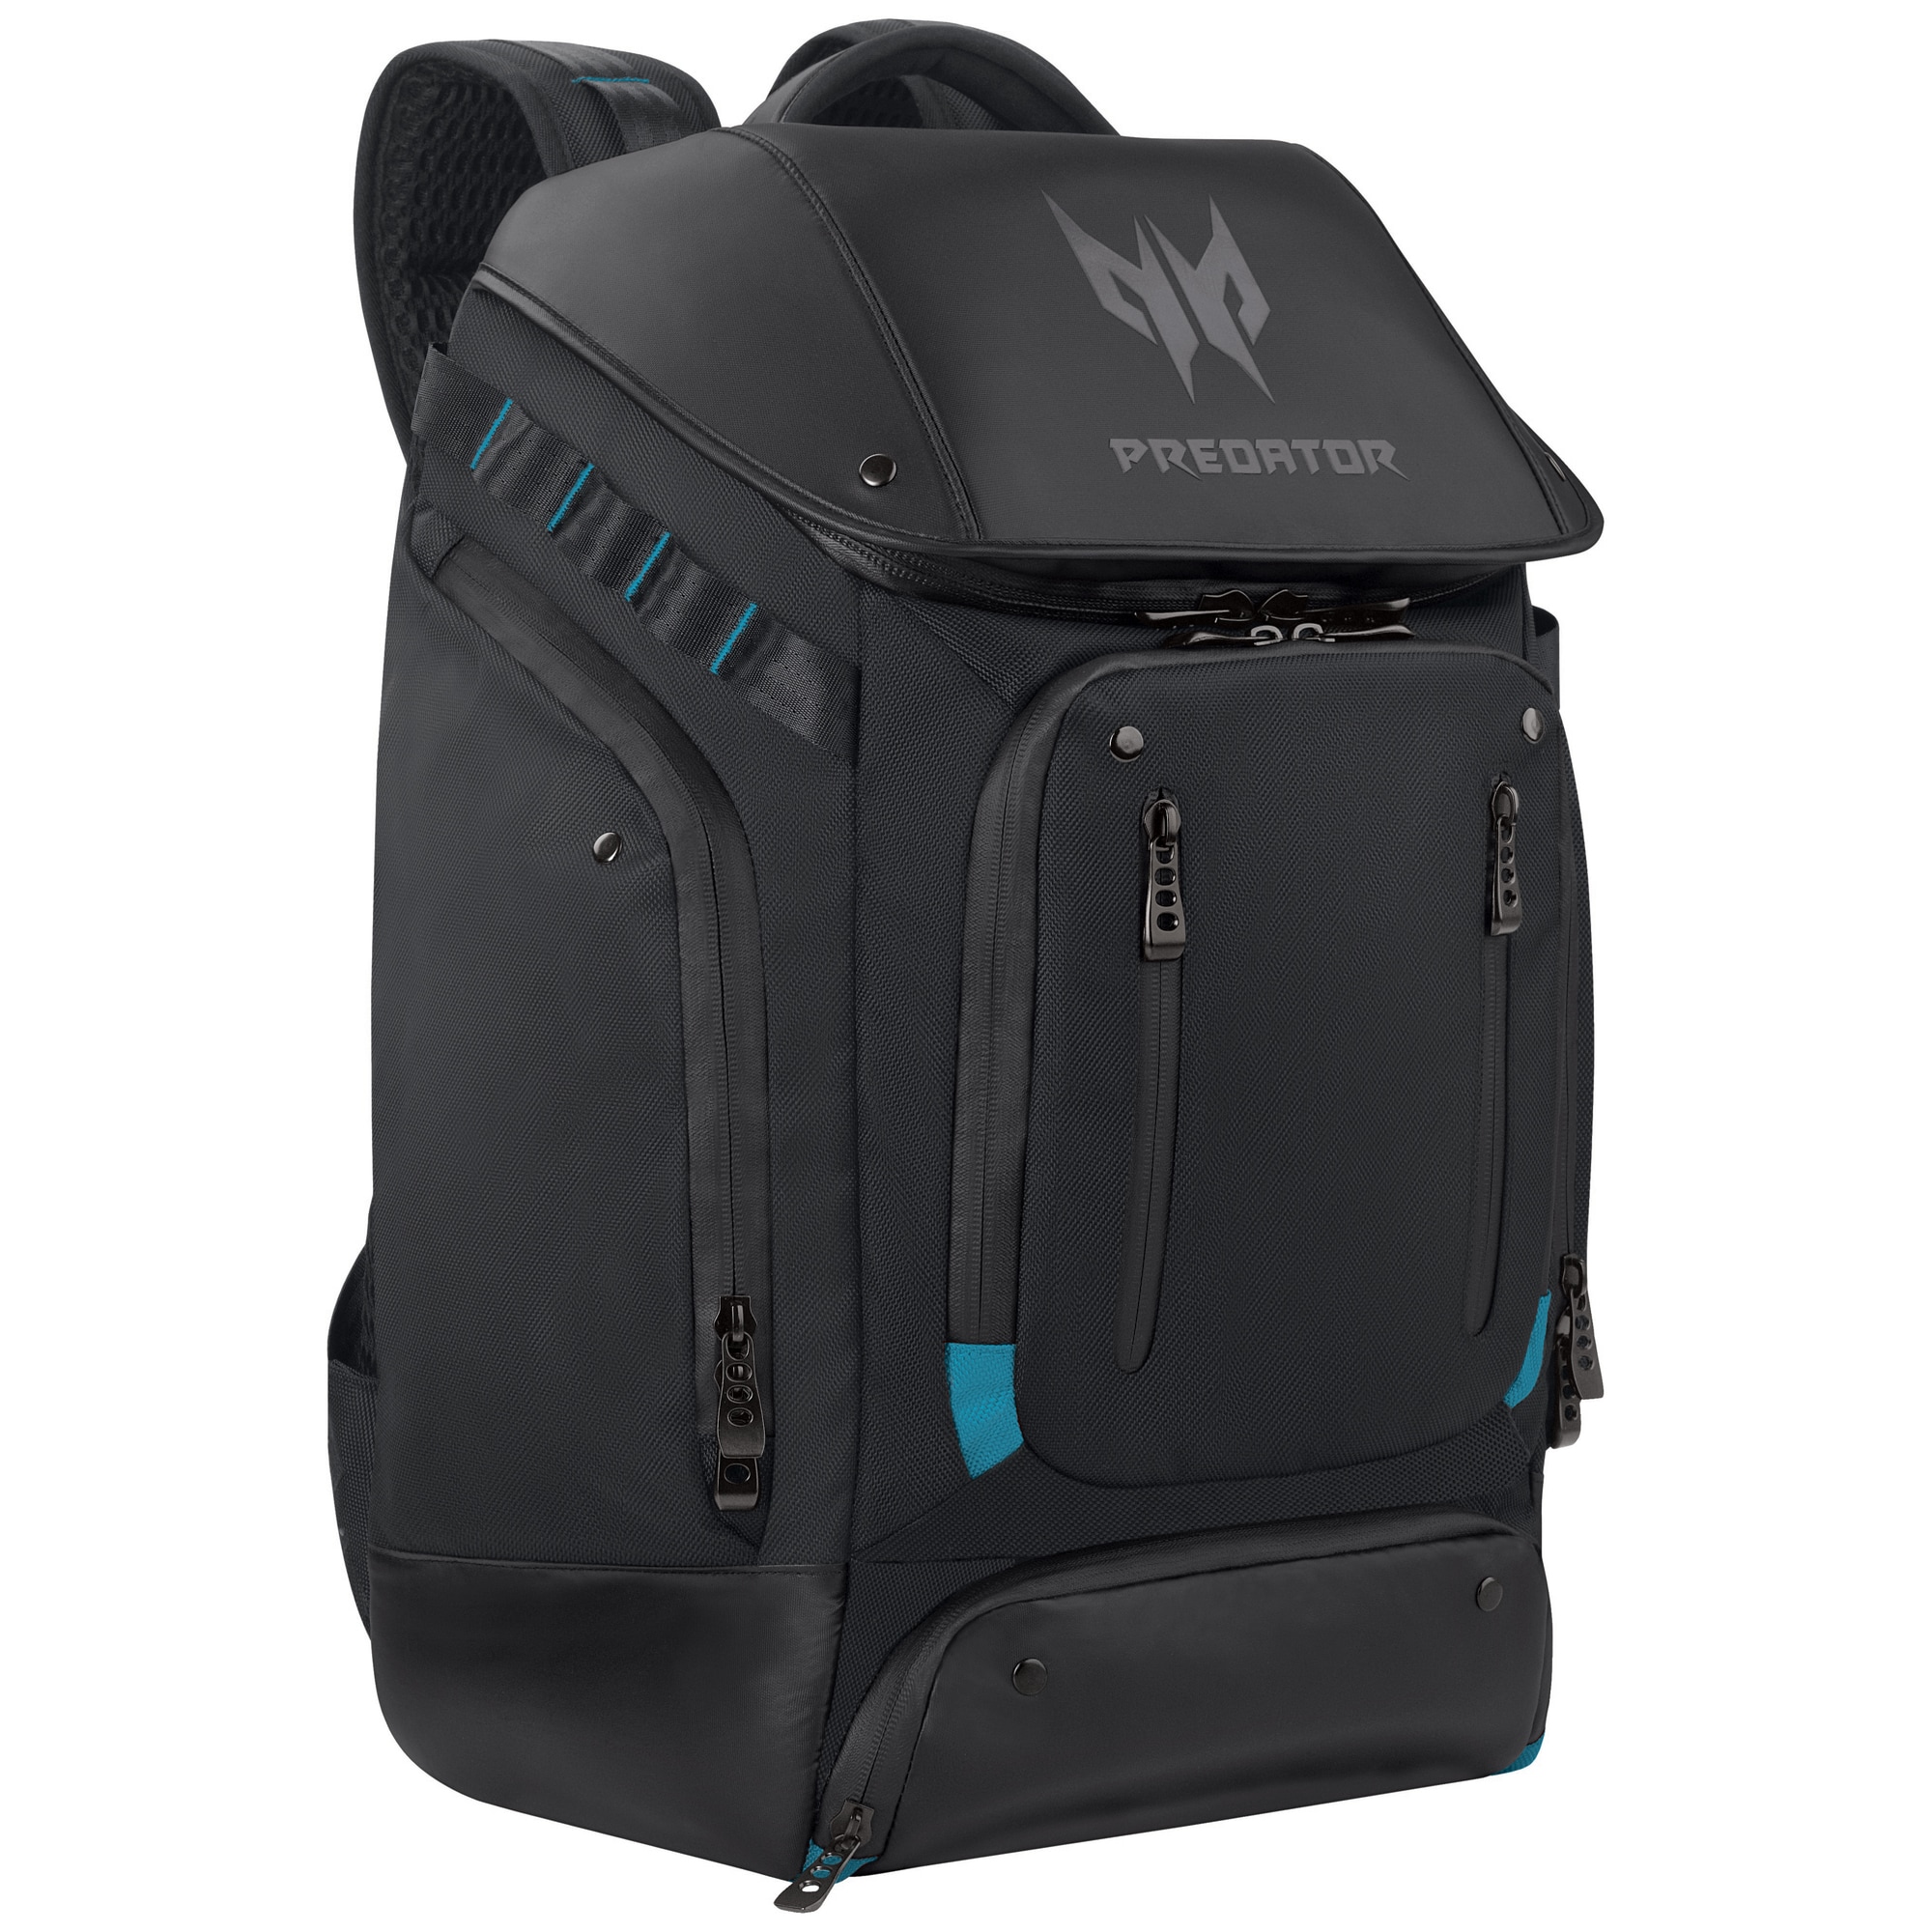 Predator gaming rygsæk (sort/blå) - PC tasker og sleeves - Elgiganten